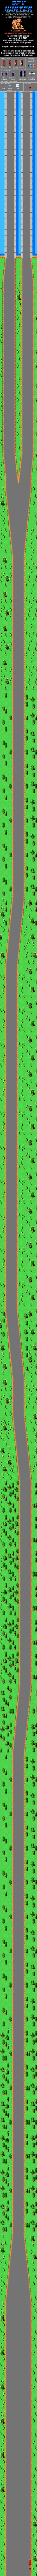 Spy Hunter - Area 1 - Nintendo NES Map